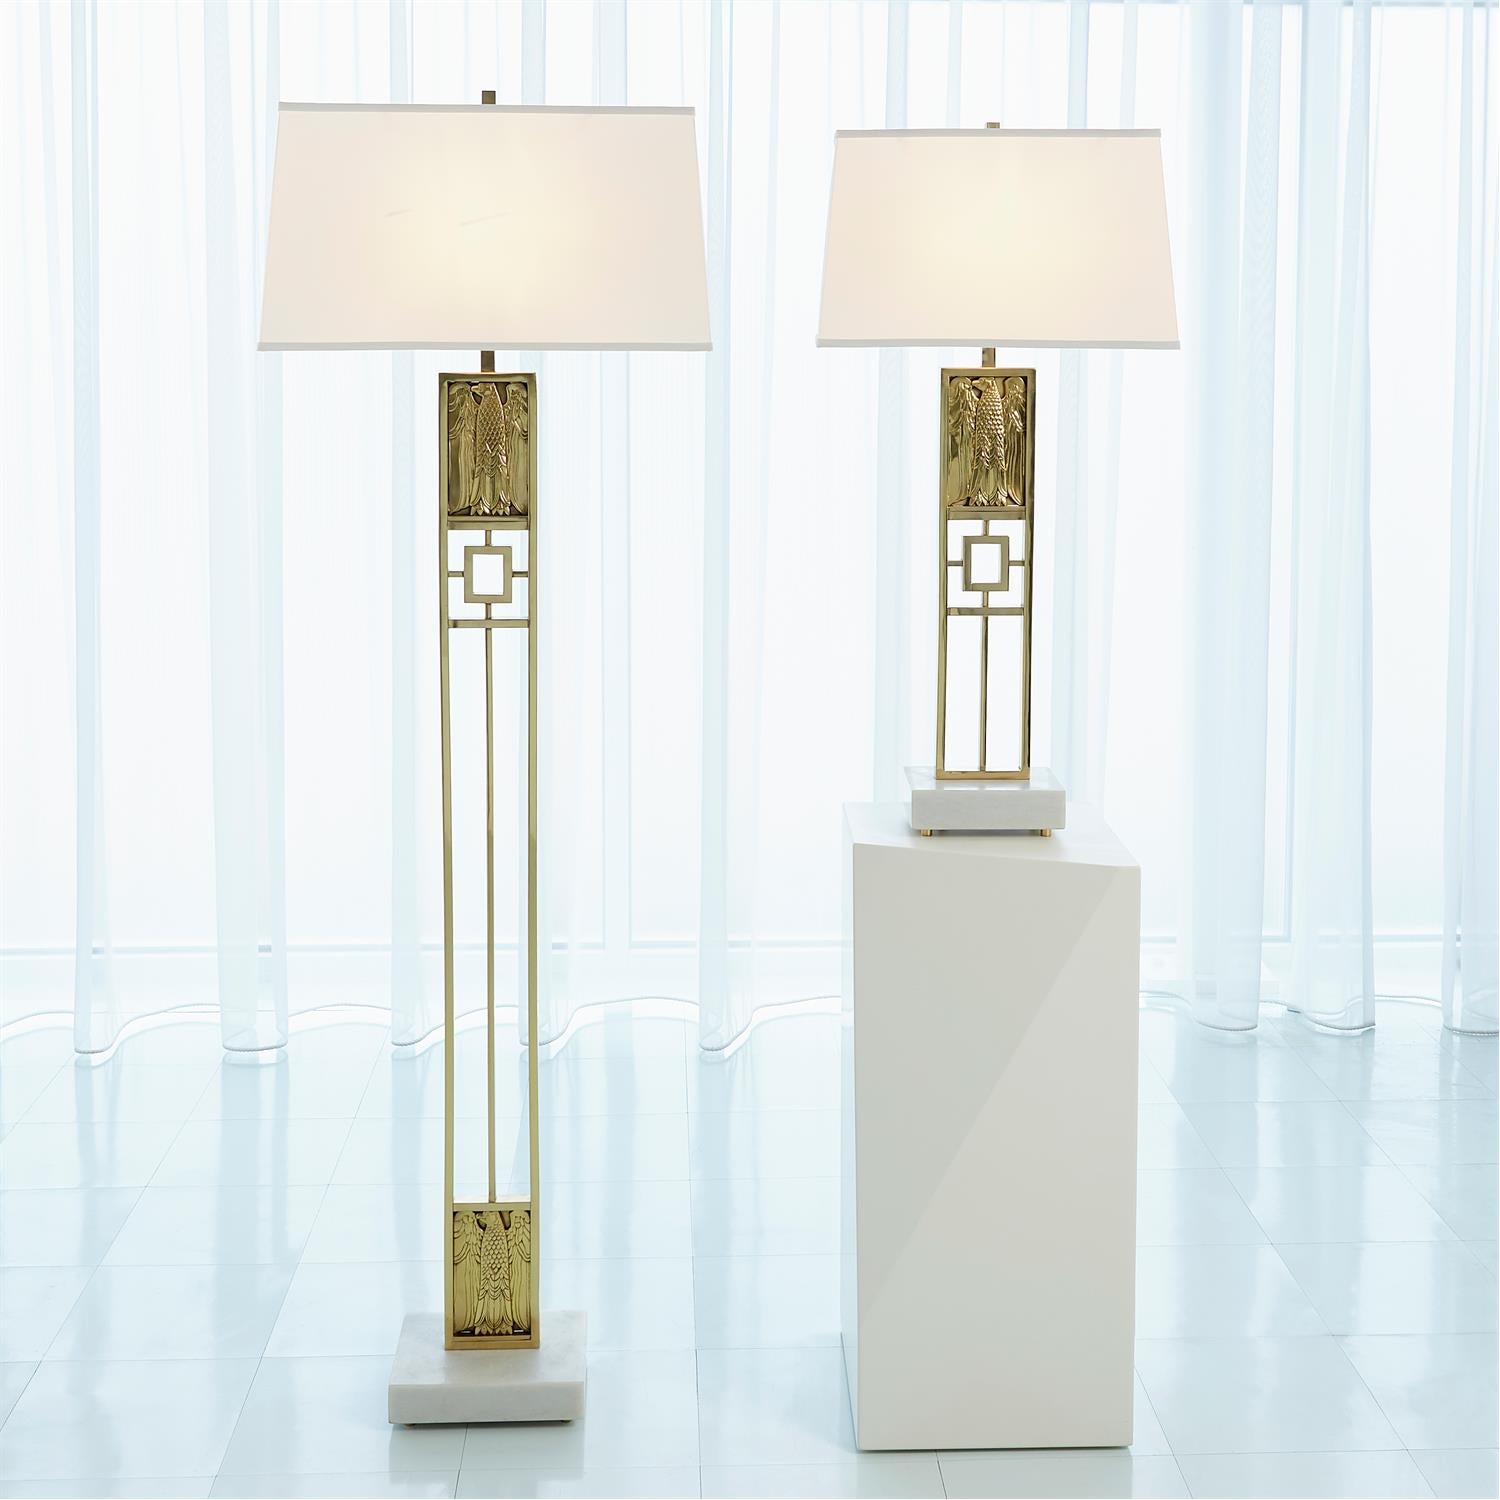 Republic Table Lamp - Brass - Grats Decor Interior Design & Build Inc.